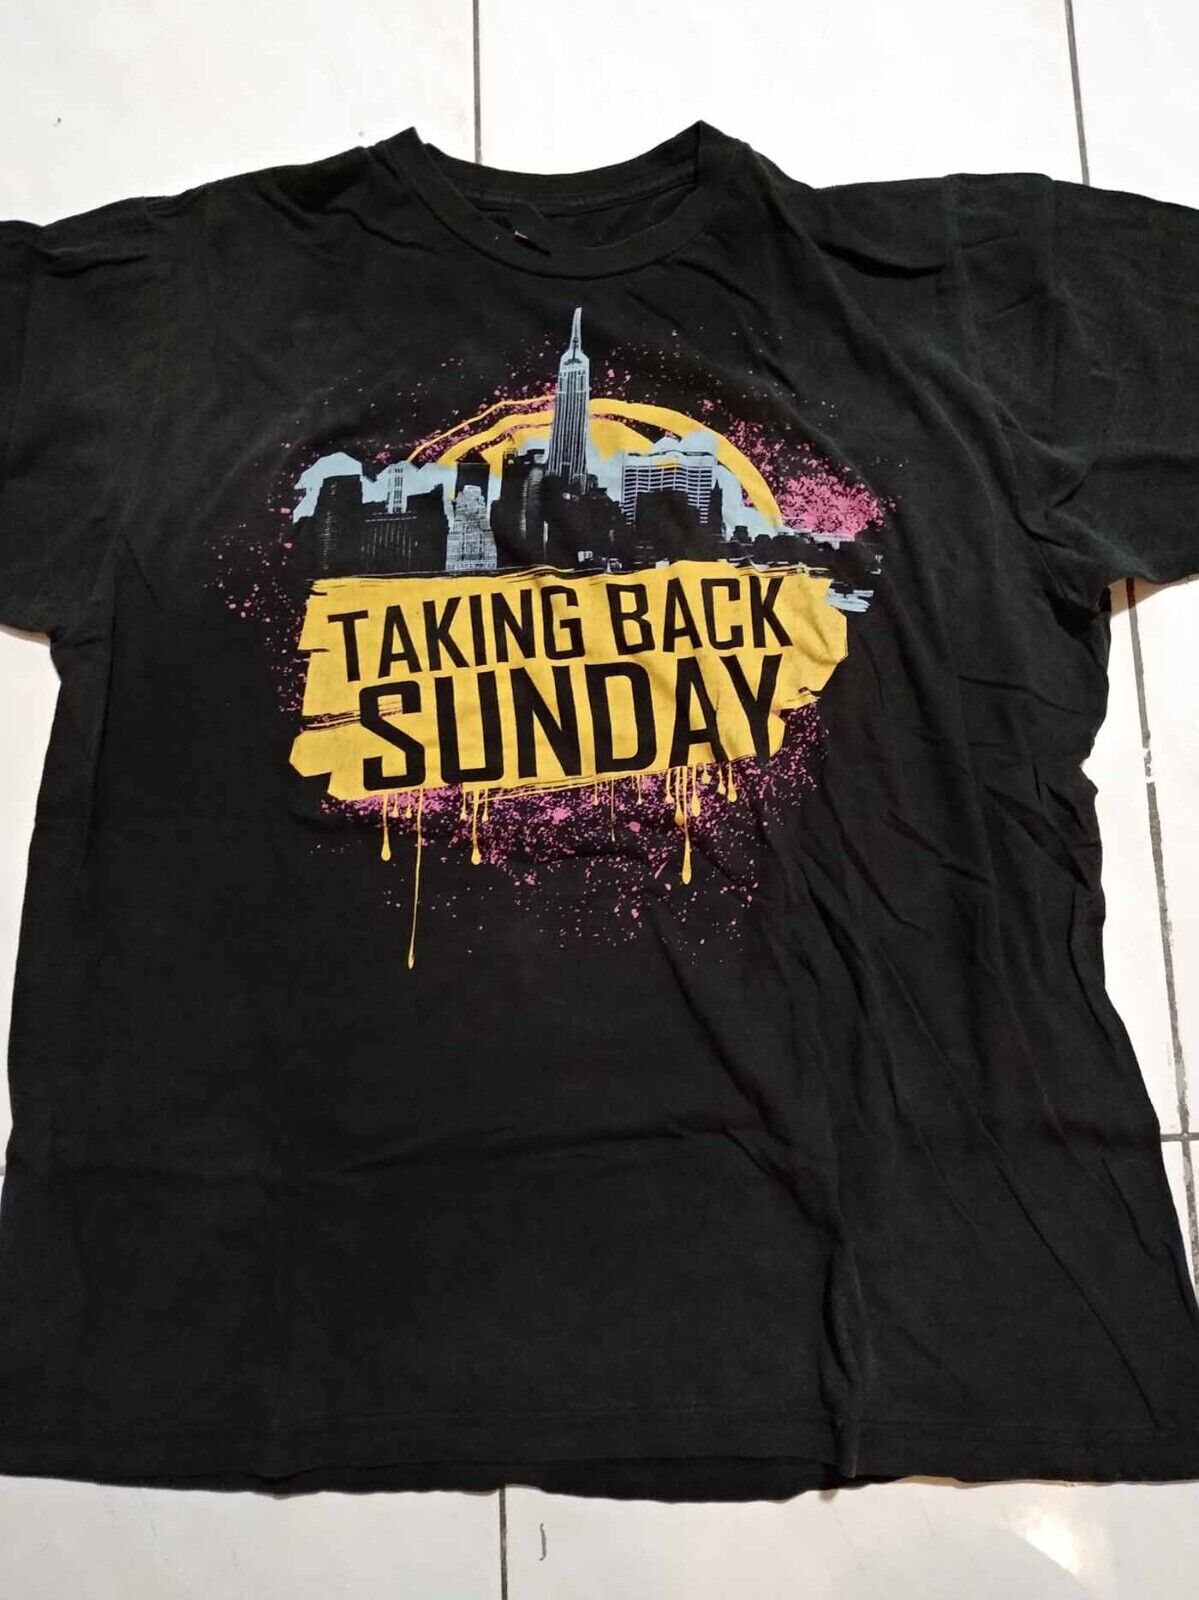 Taking Back Sunday City Tee Shirt Black Uniex S-2345XL LE479